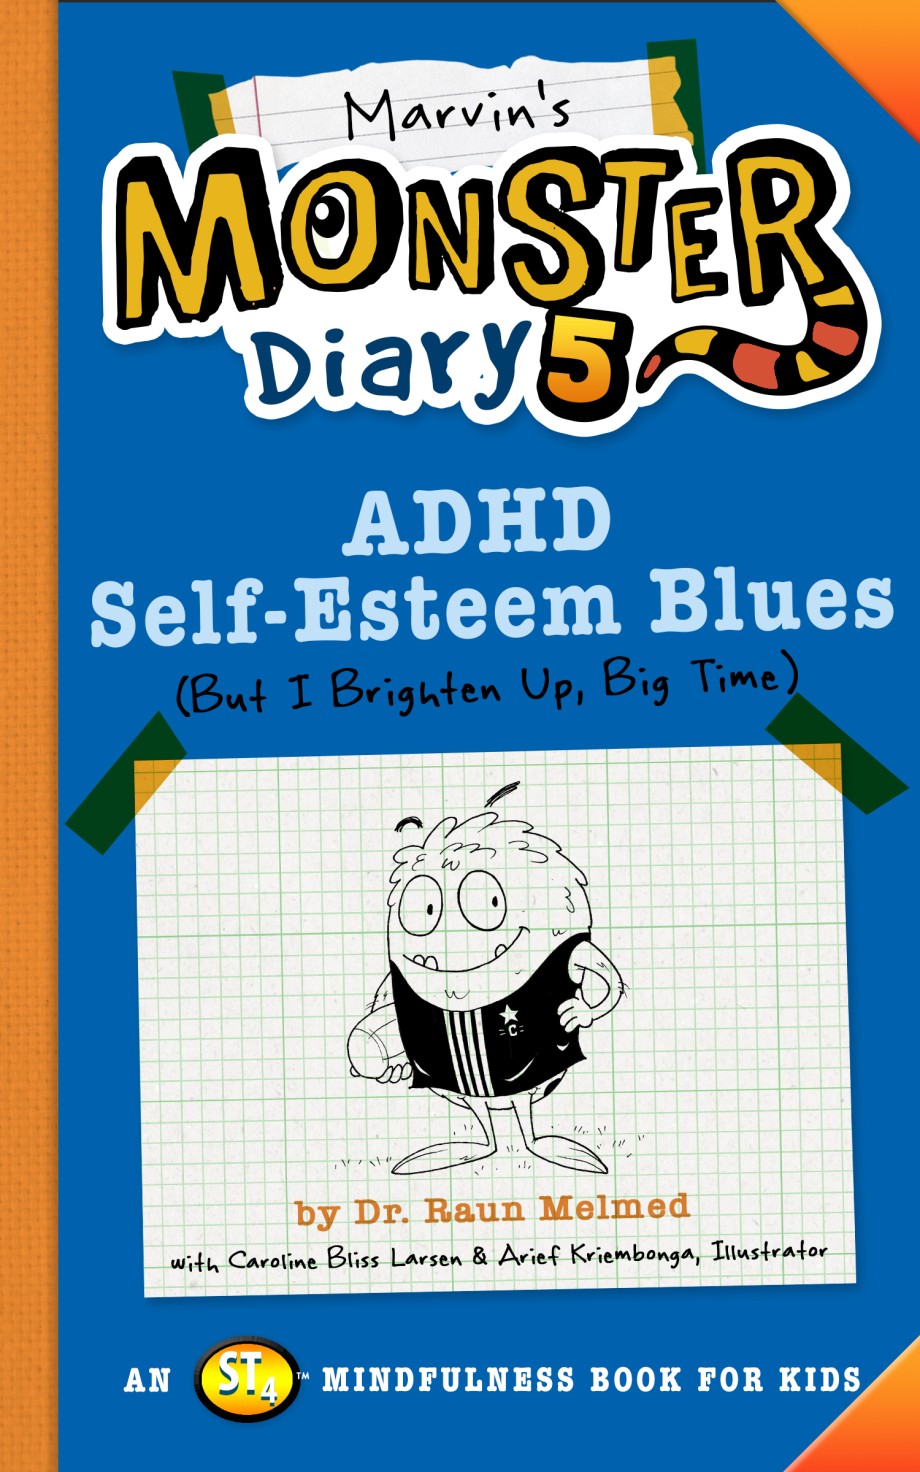 Marvin's Monster Diary 5 ADHD Self-Esteem Blues